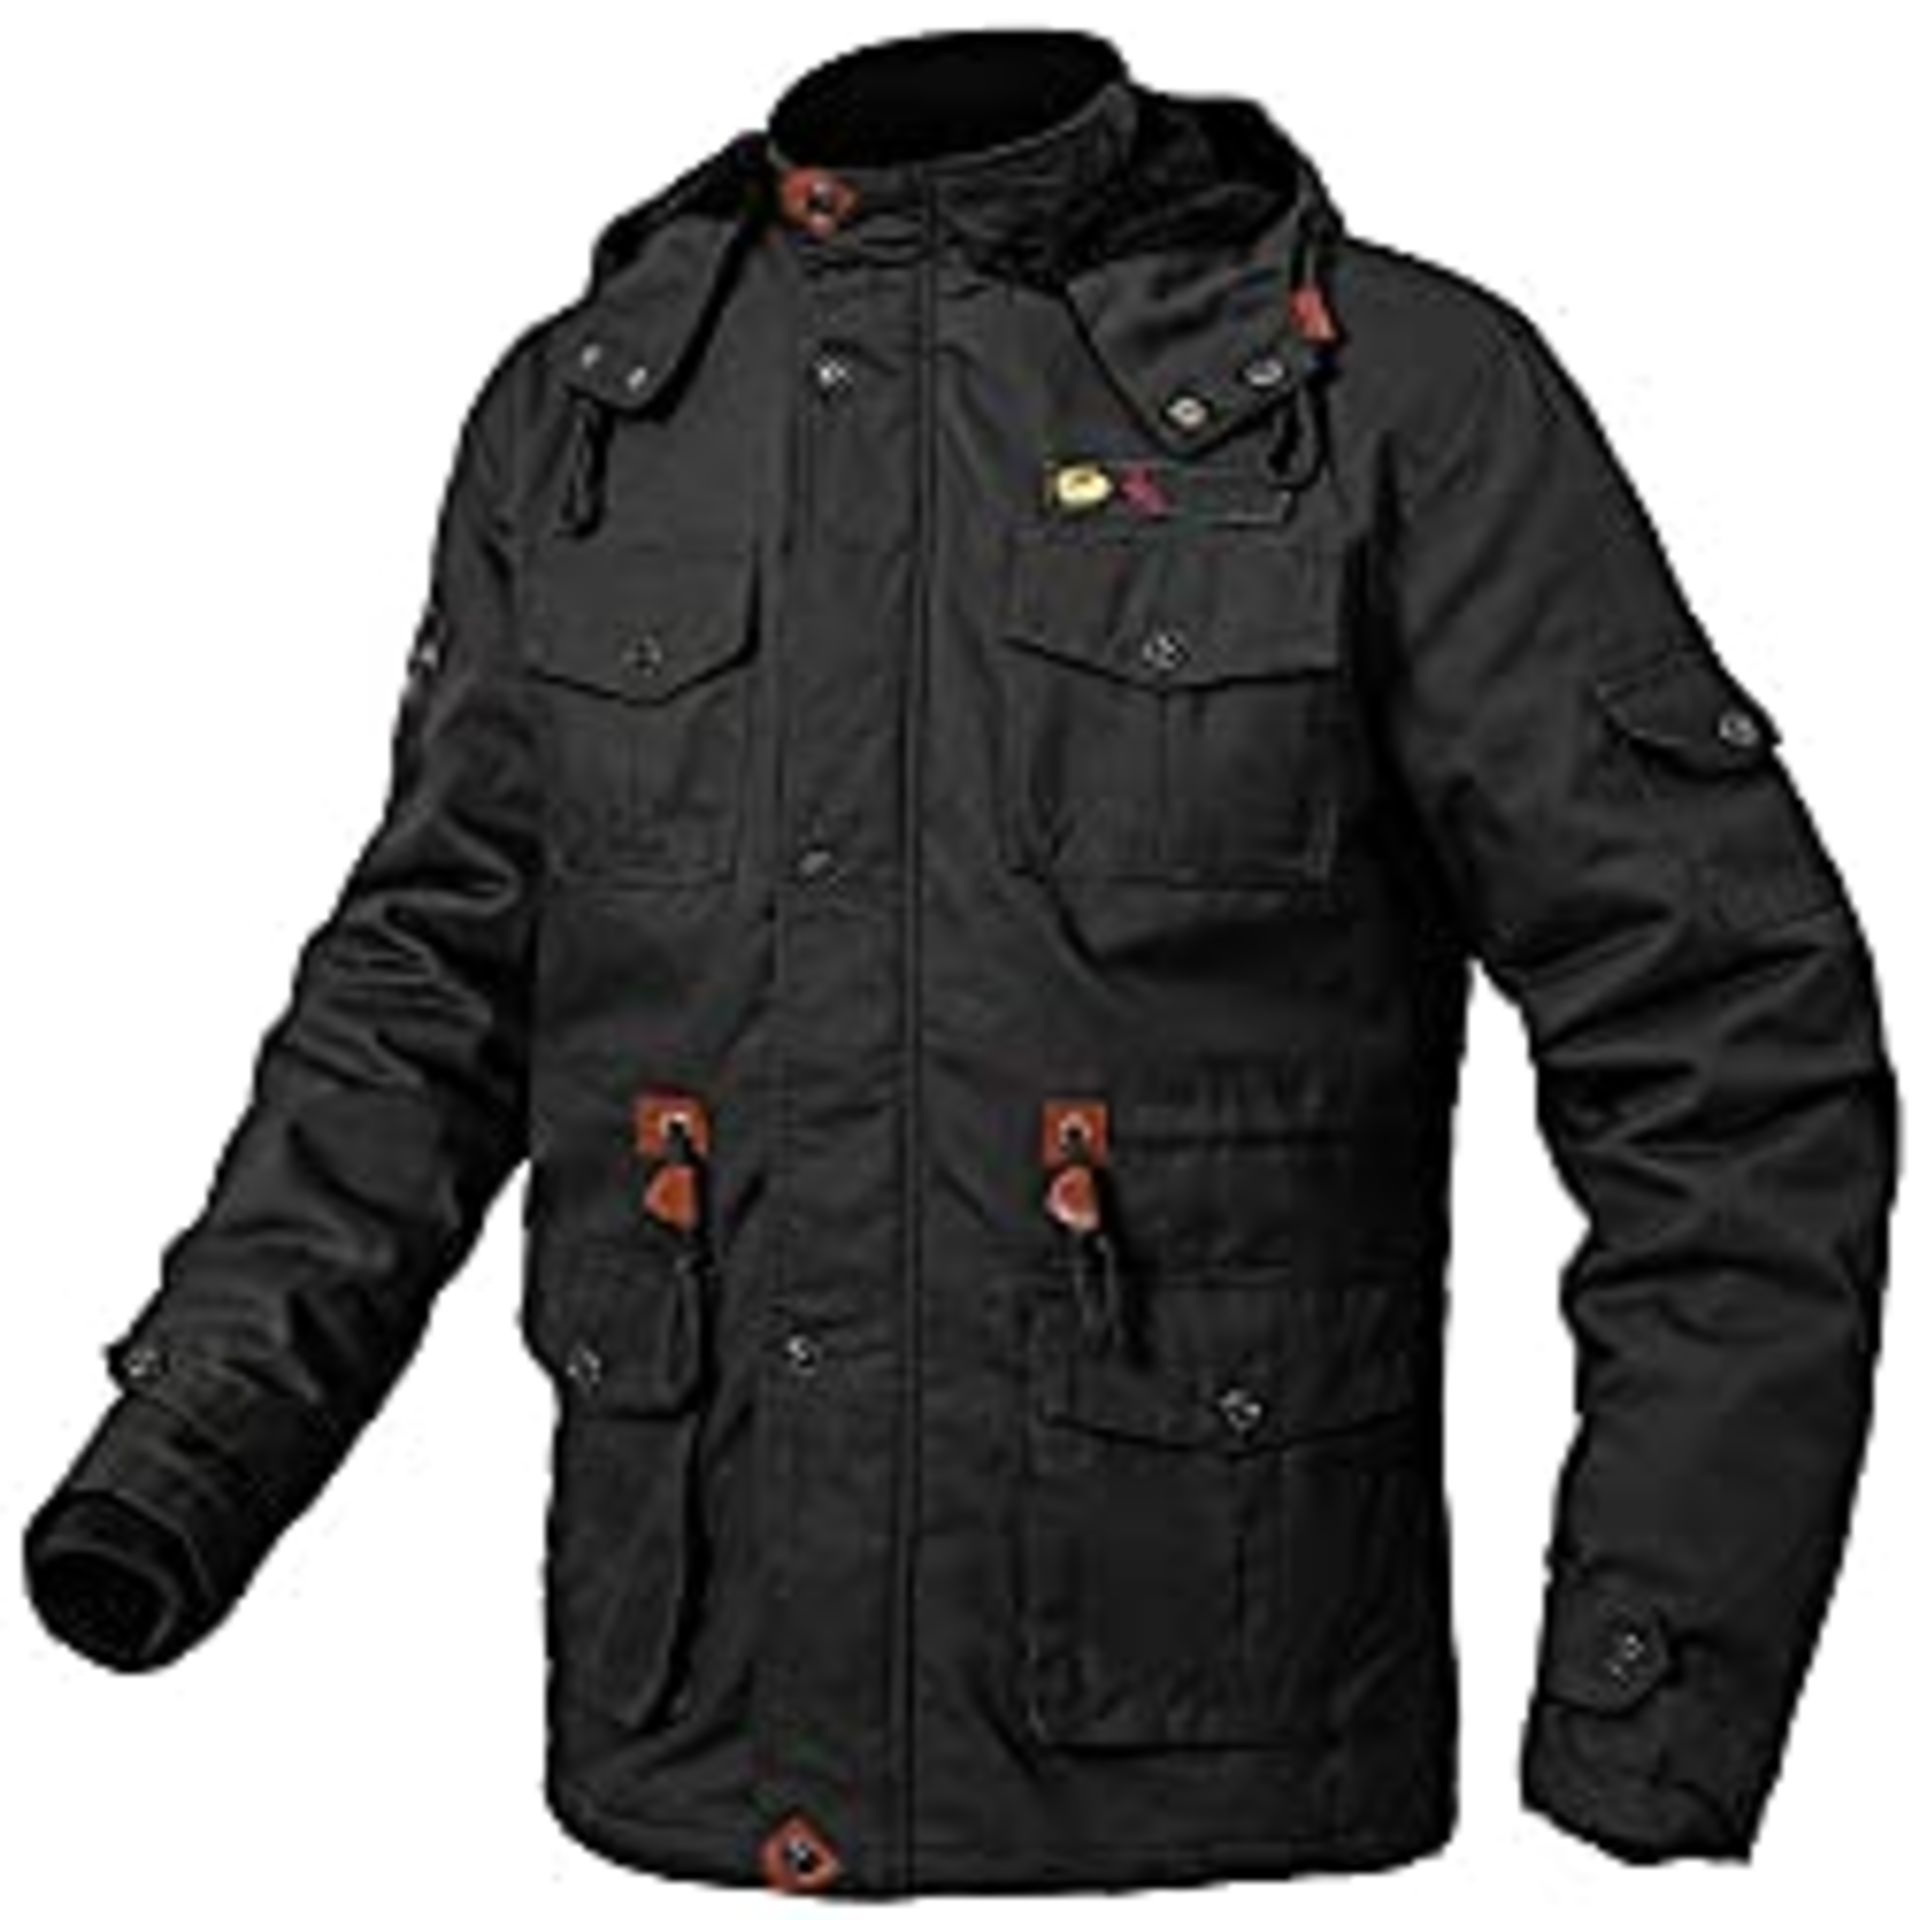 RRP £49.99 donhobo Men's Parka Winter Coats Jackets with Faux